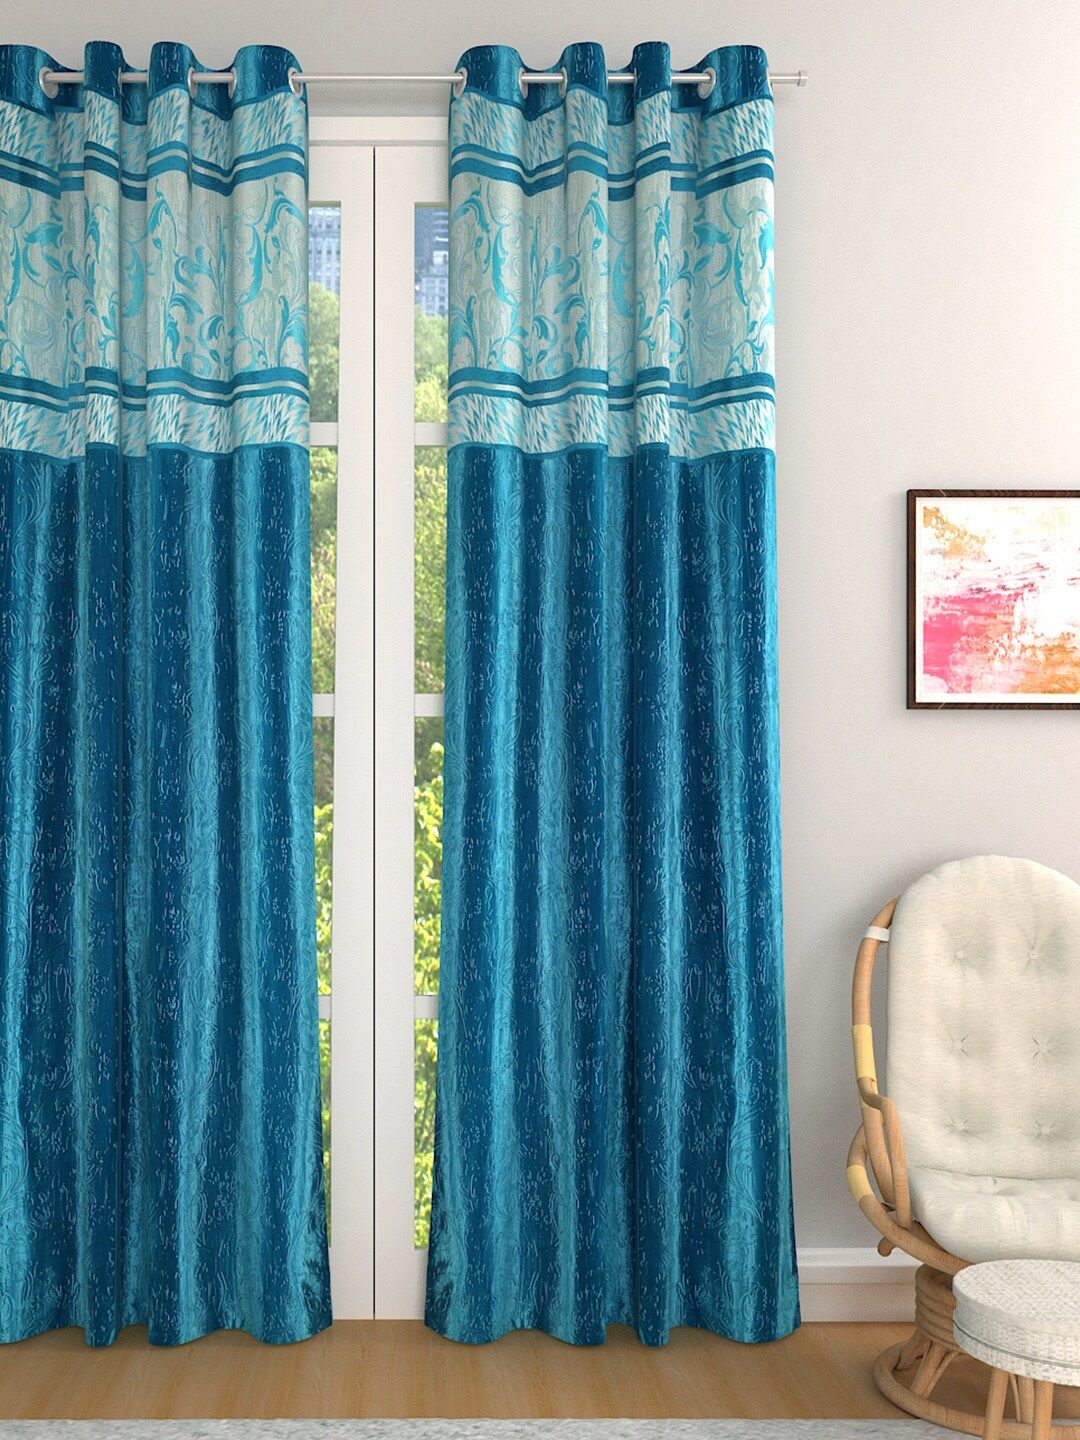 ROMEE Turquoise Blue Single Room Darkening Curtain Price in India